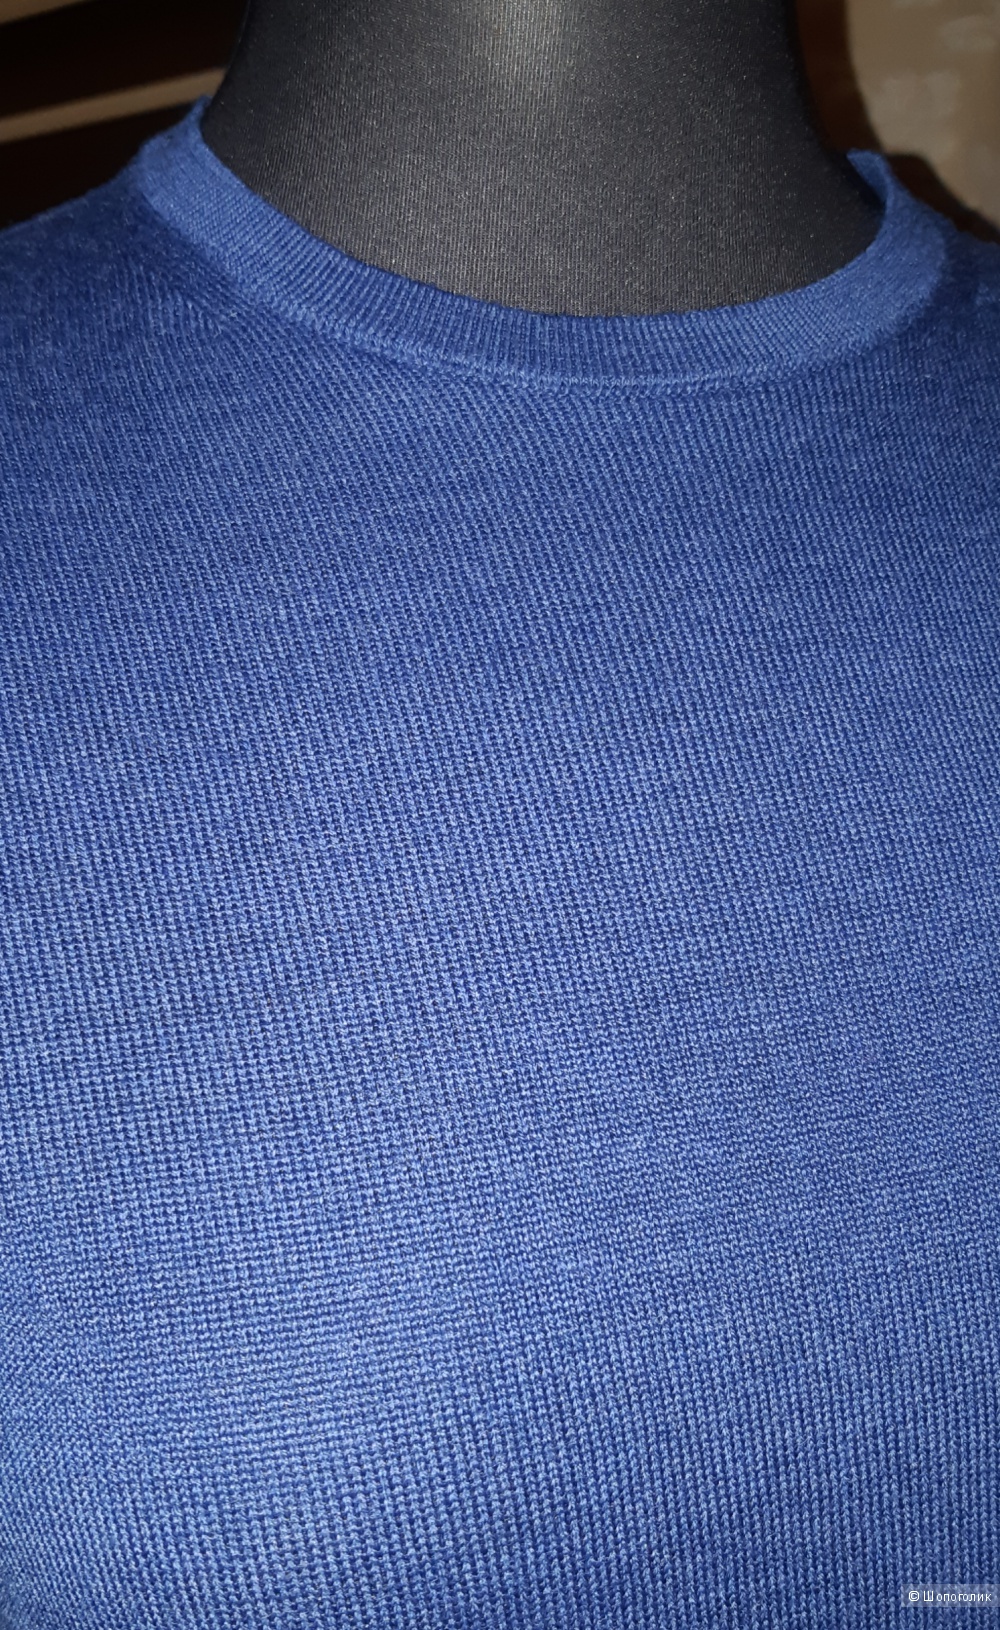 Пуловер ovs, размер s/m